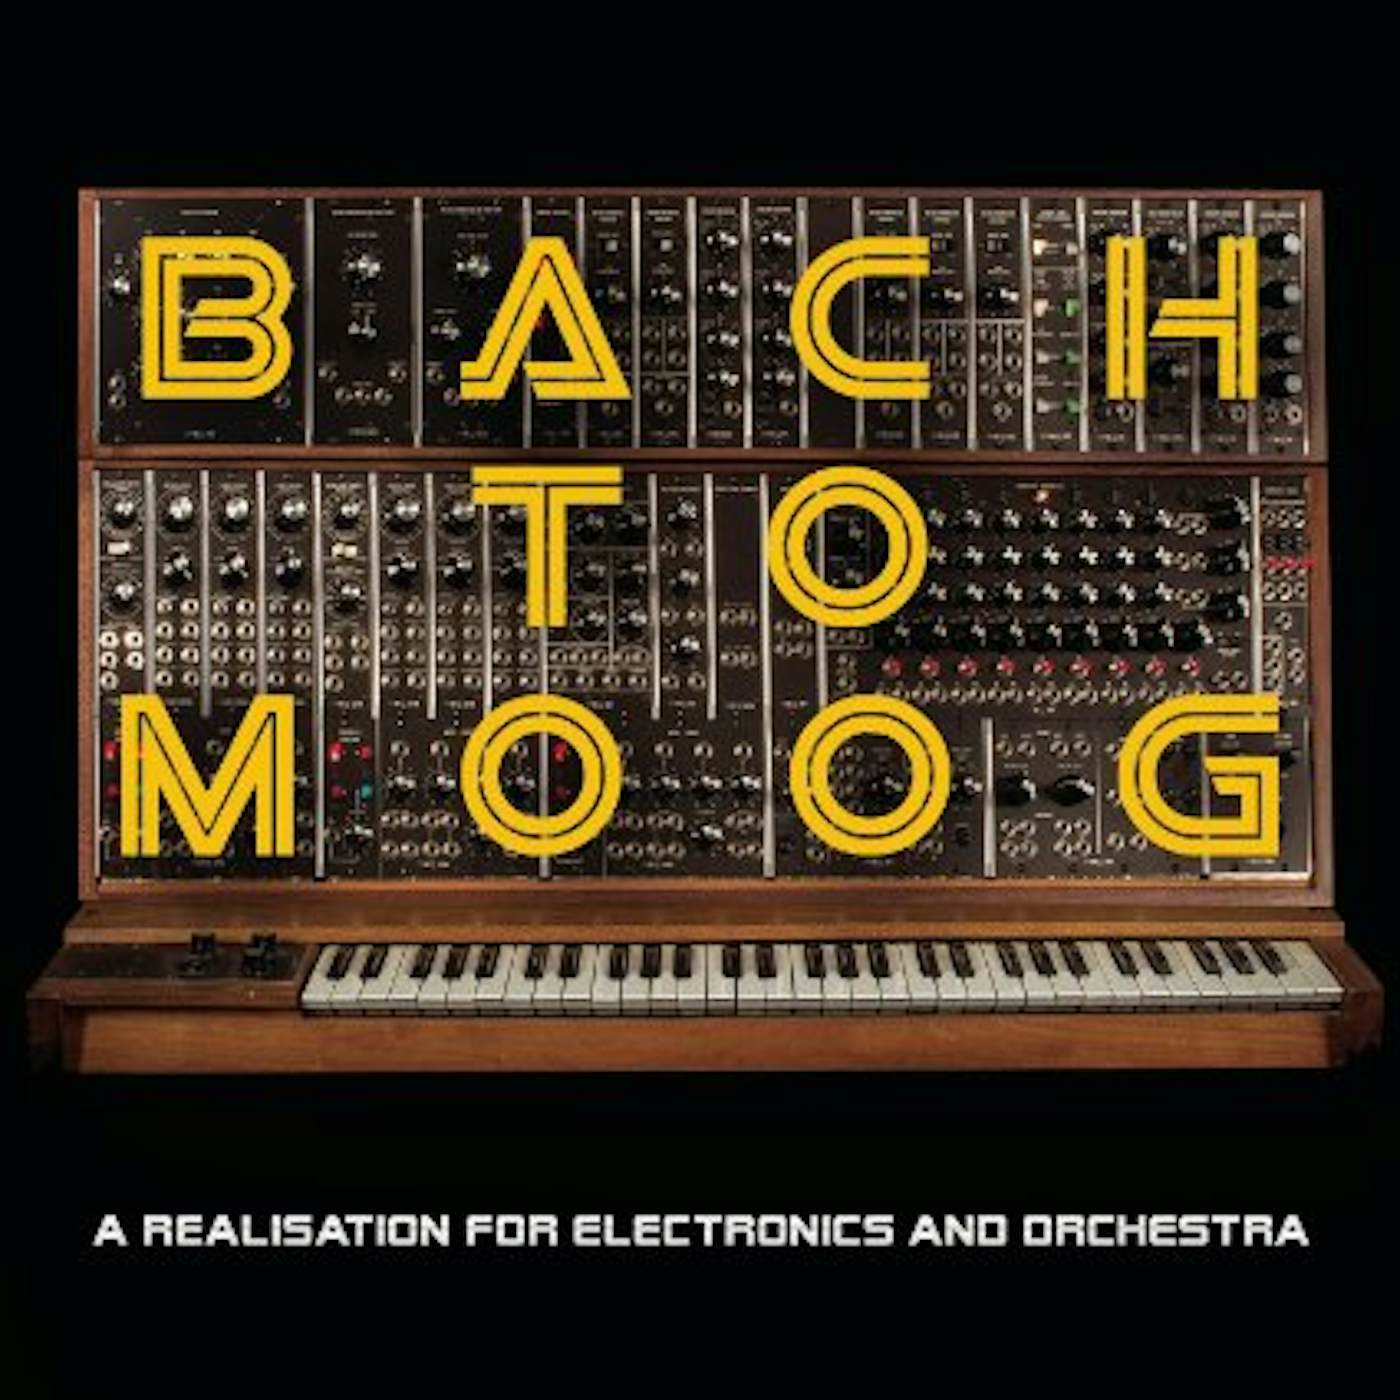 Craig Leon BACH TO MOOG CD